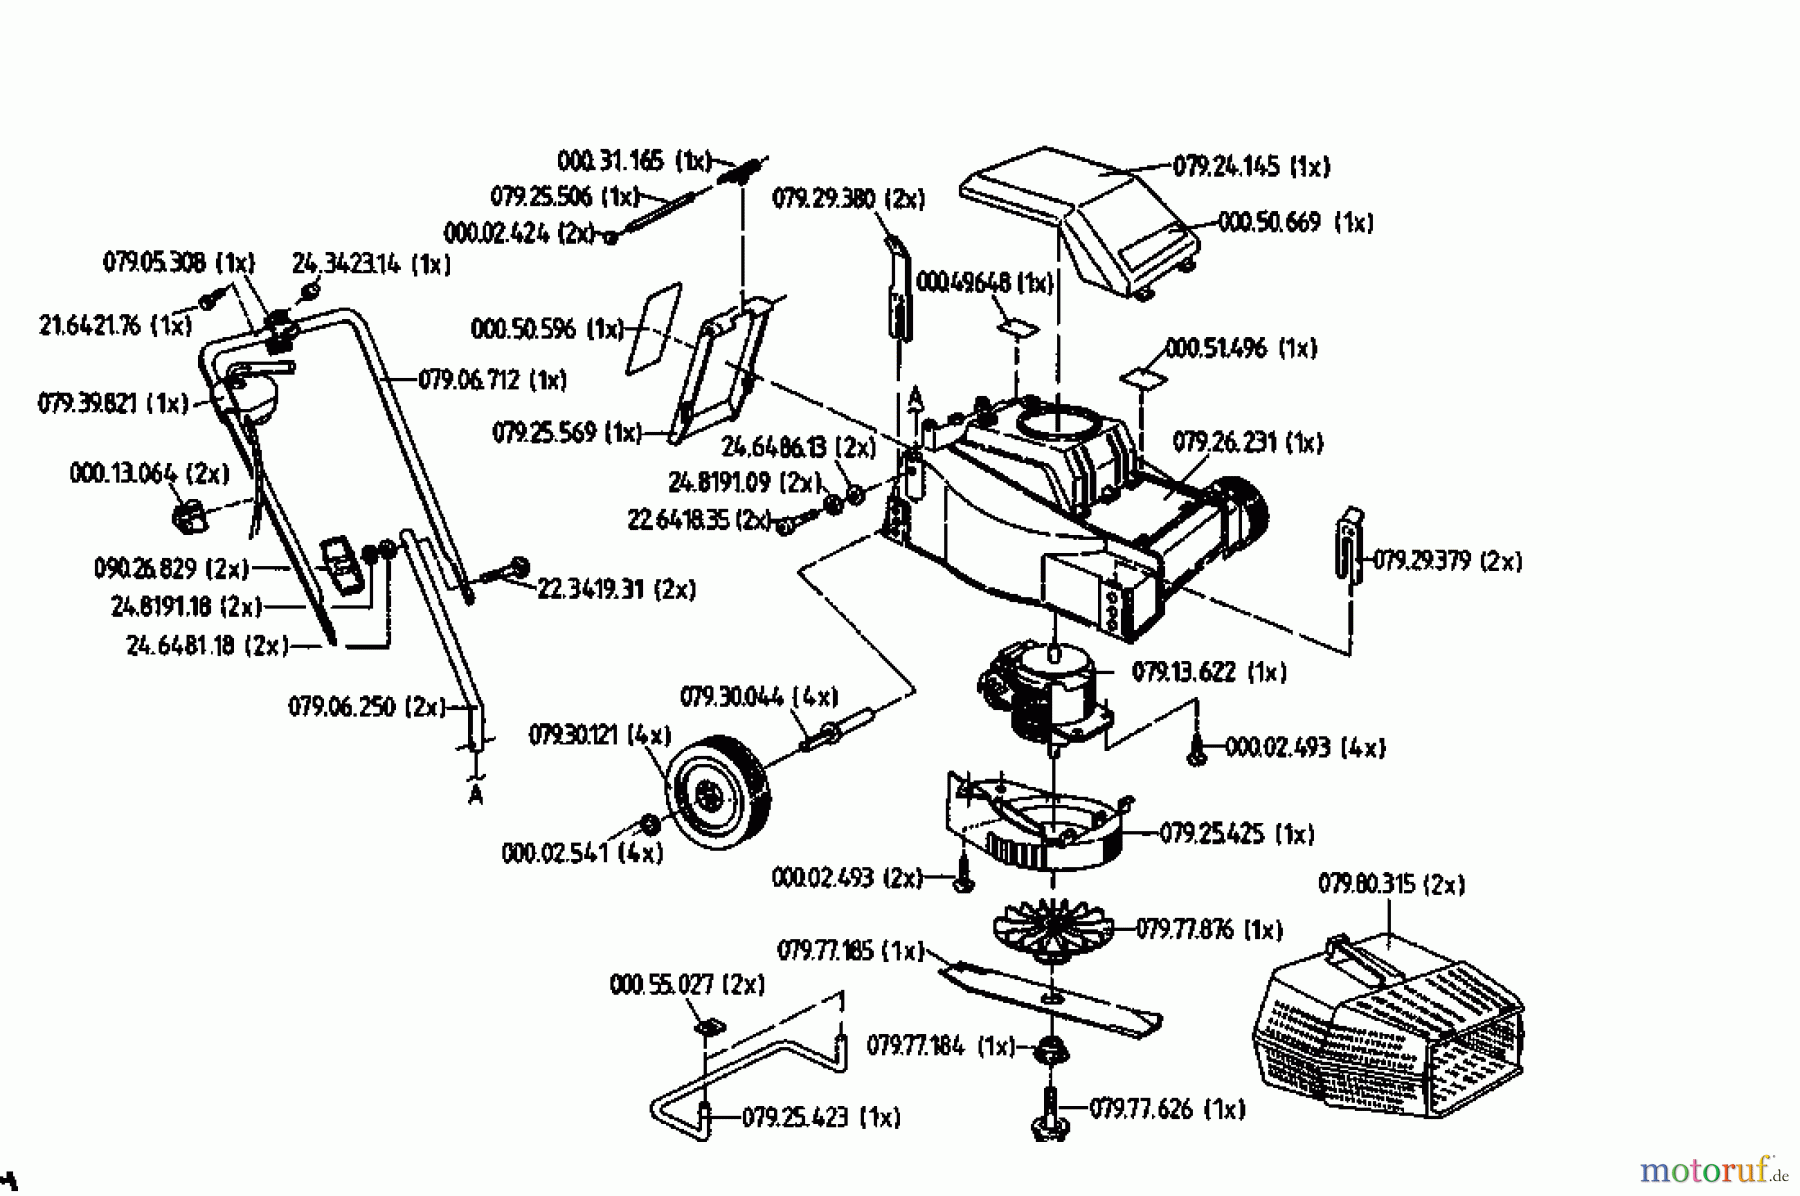  Golf Electric mower Junior 02819.02  (1994) Basic machine